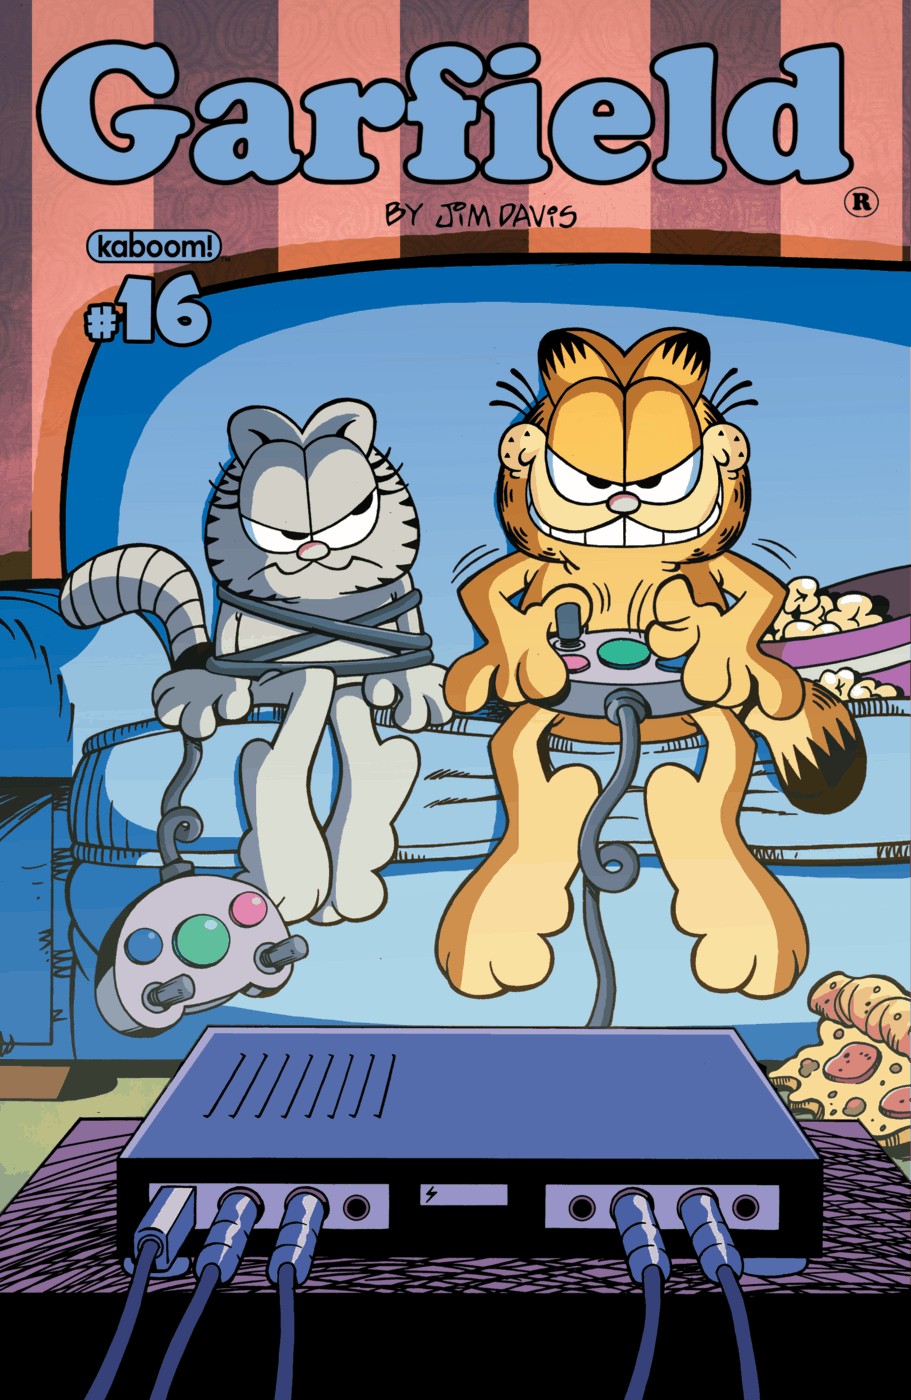 Read online Garfield comic -  Issue #16 - 1